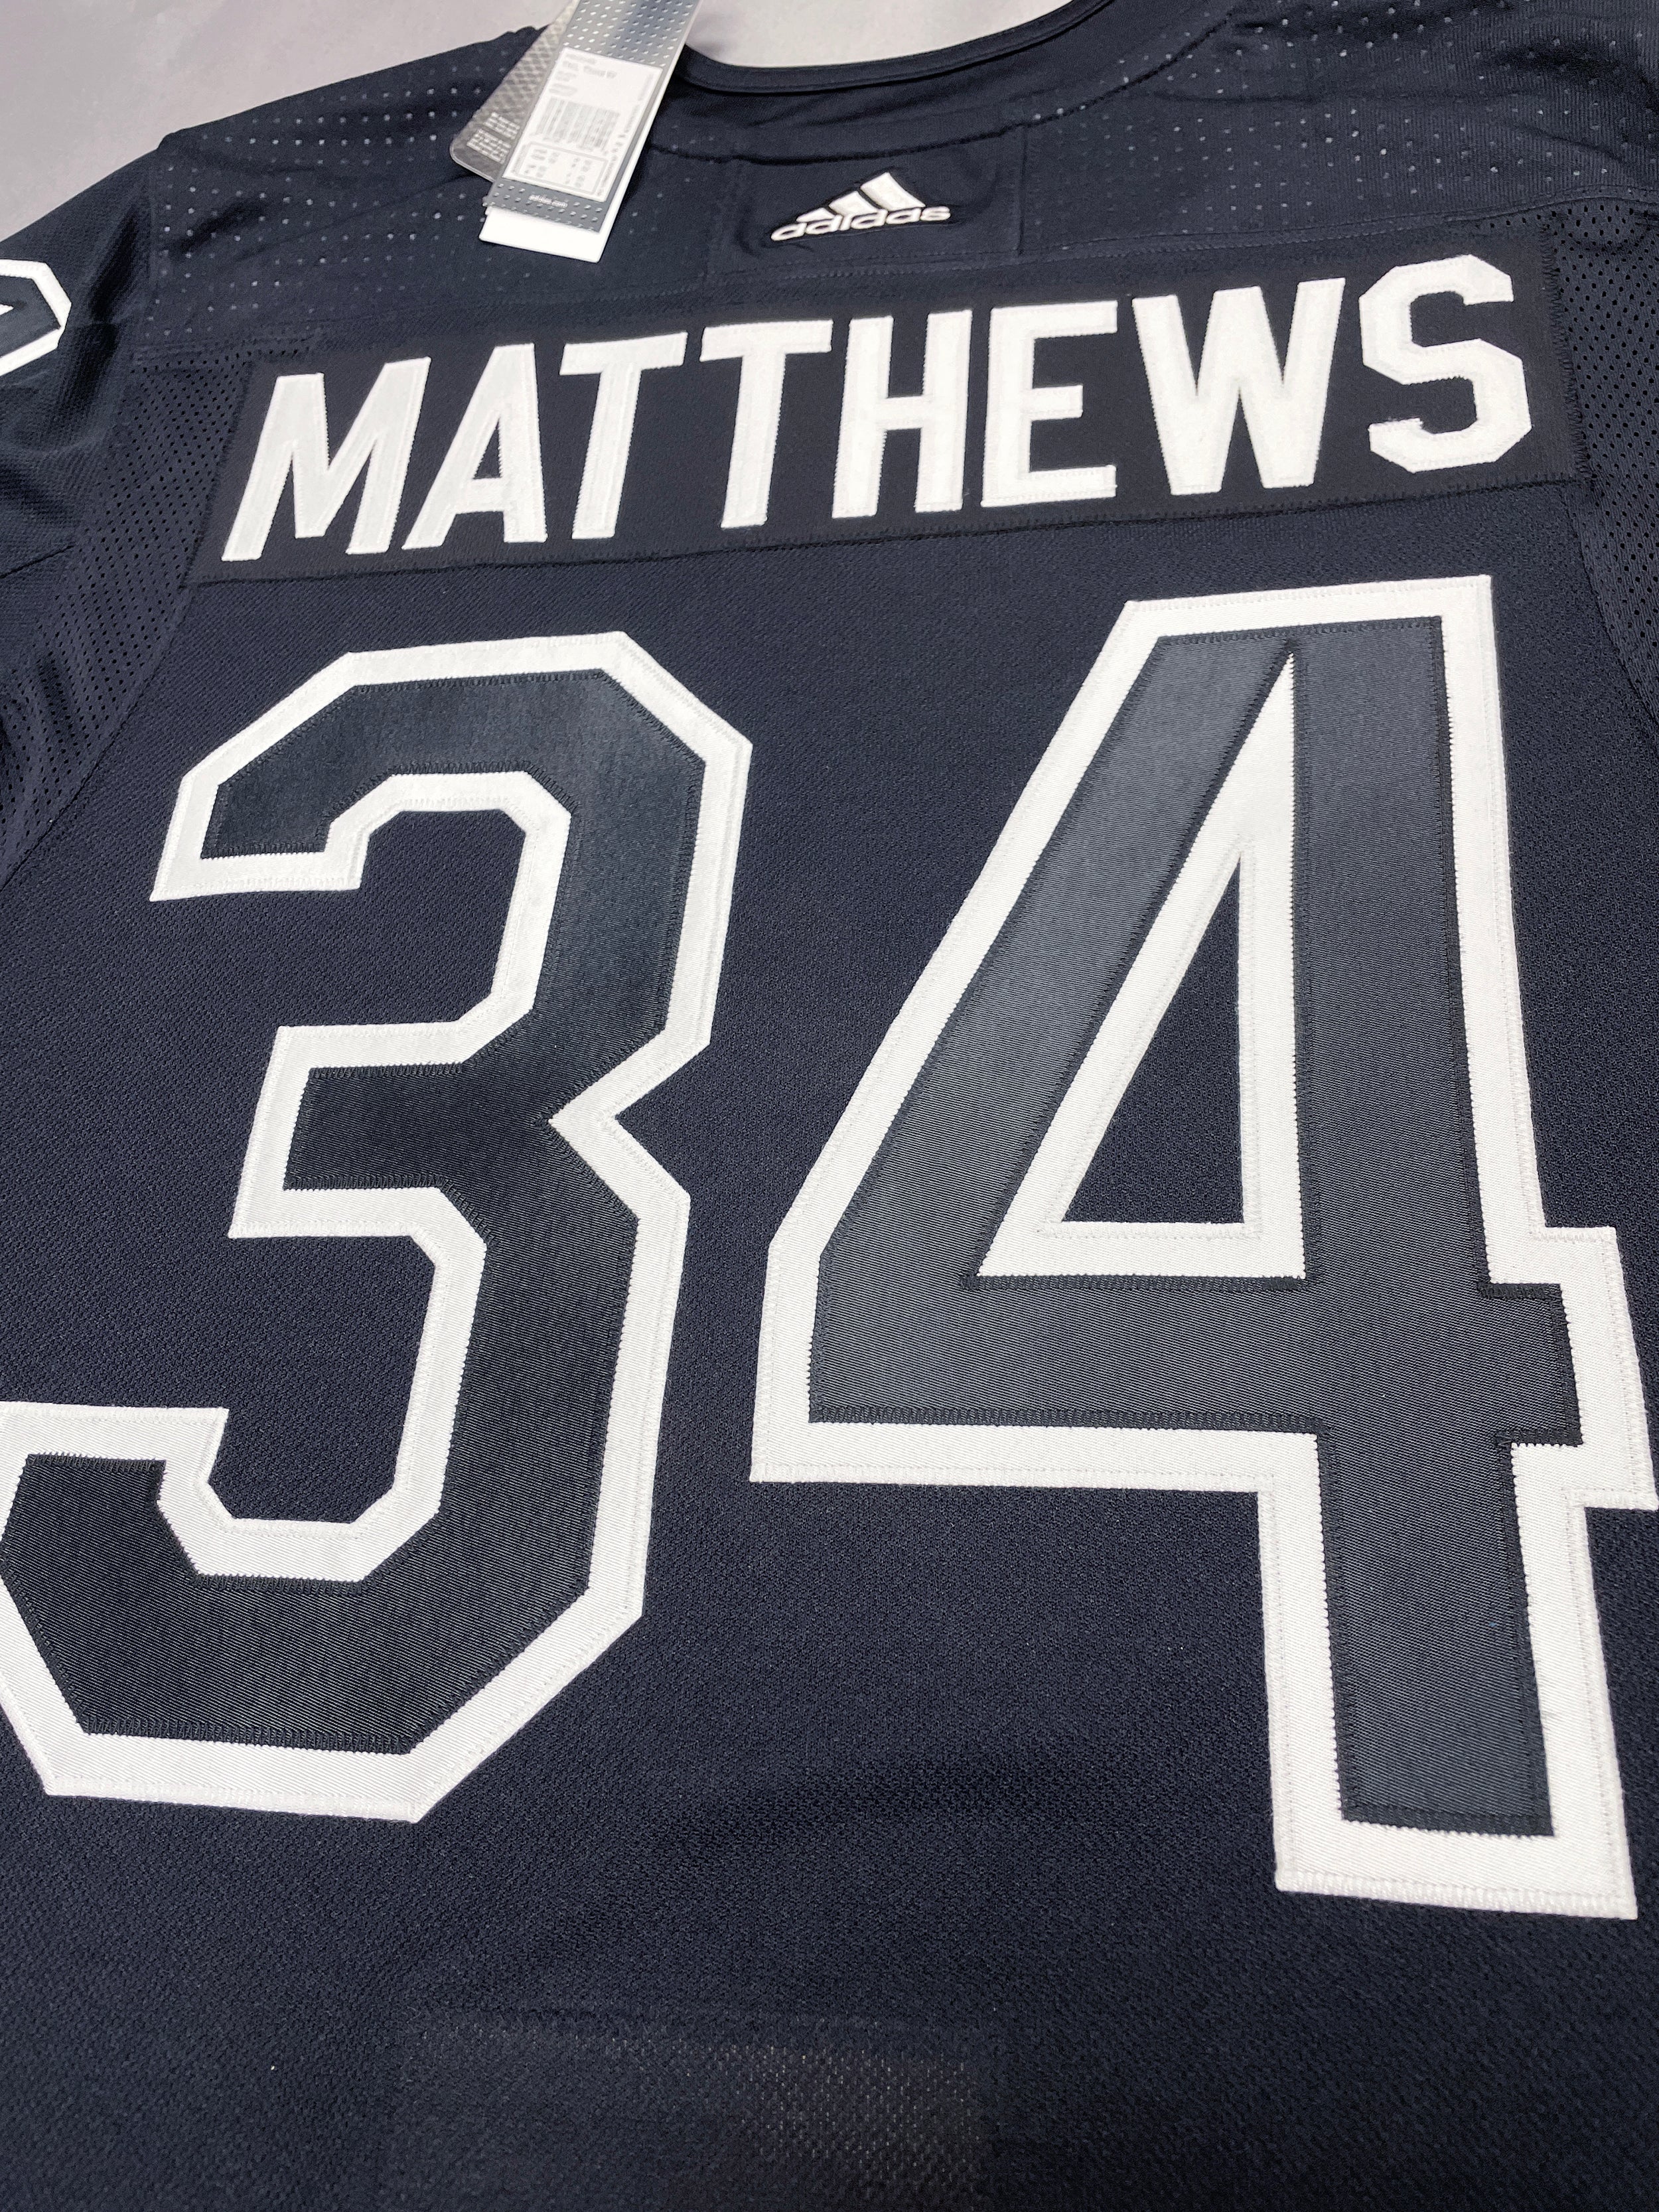 Auston Matthews of the Toronto Maple Leafs, wearing the alternate